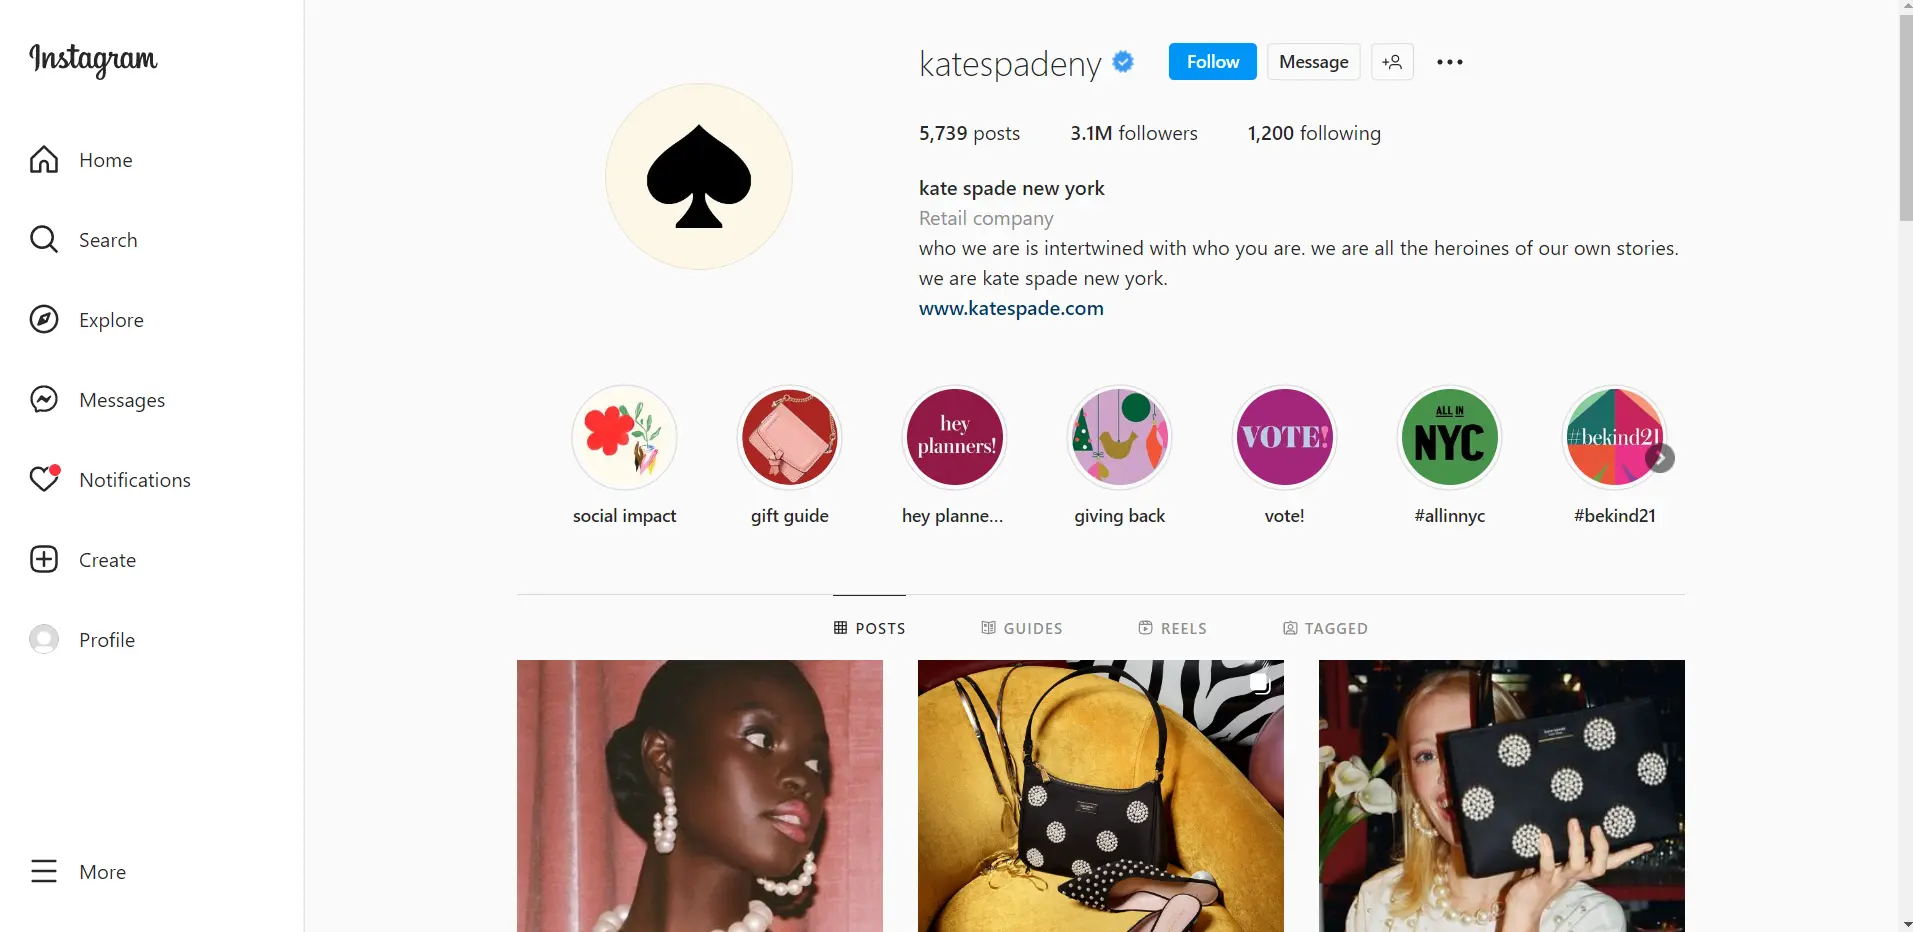 Kate Spade New York Instagram page